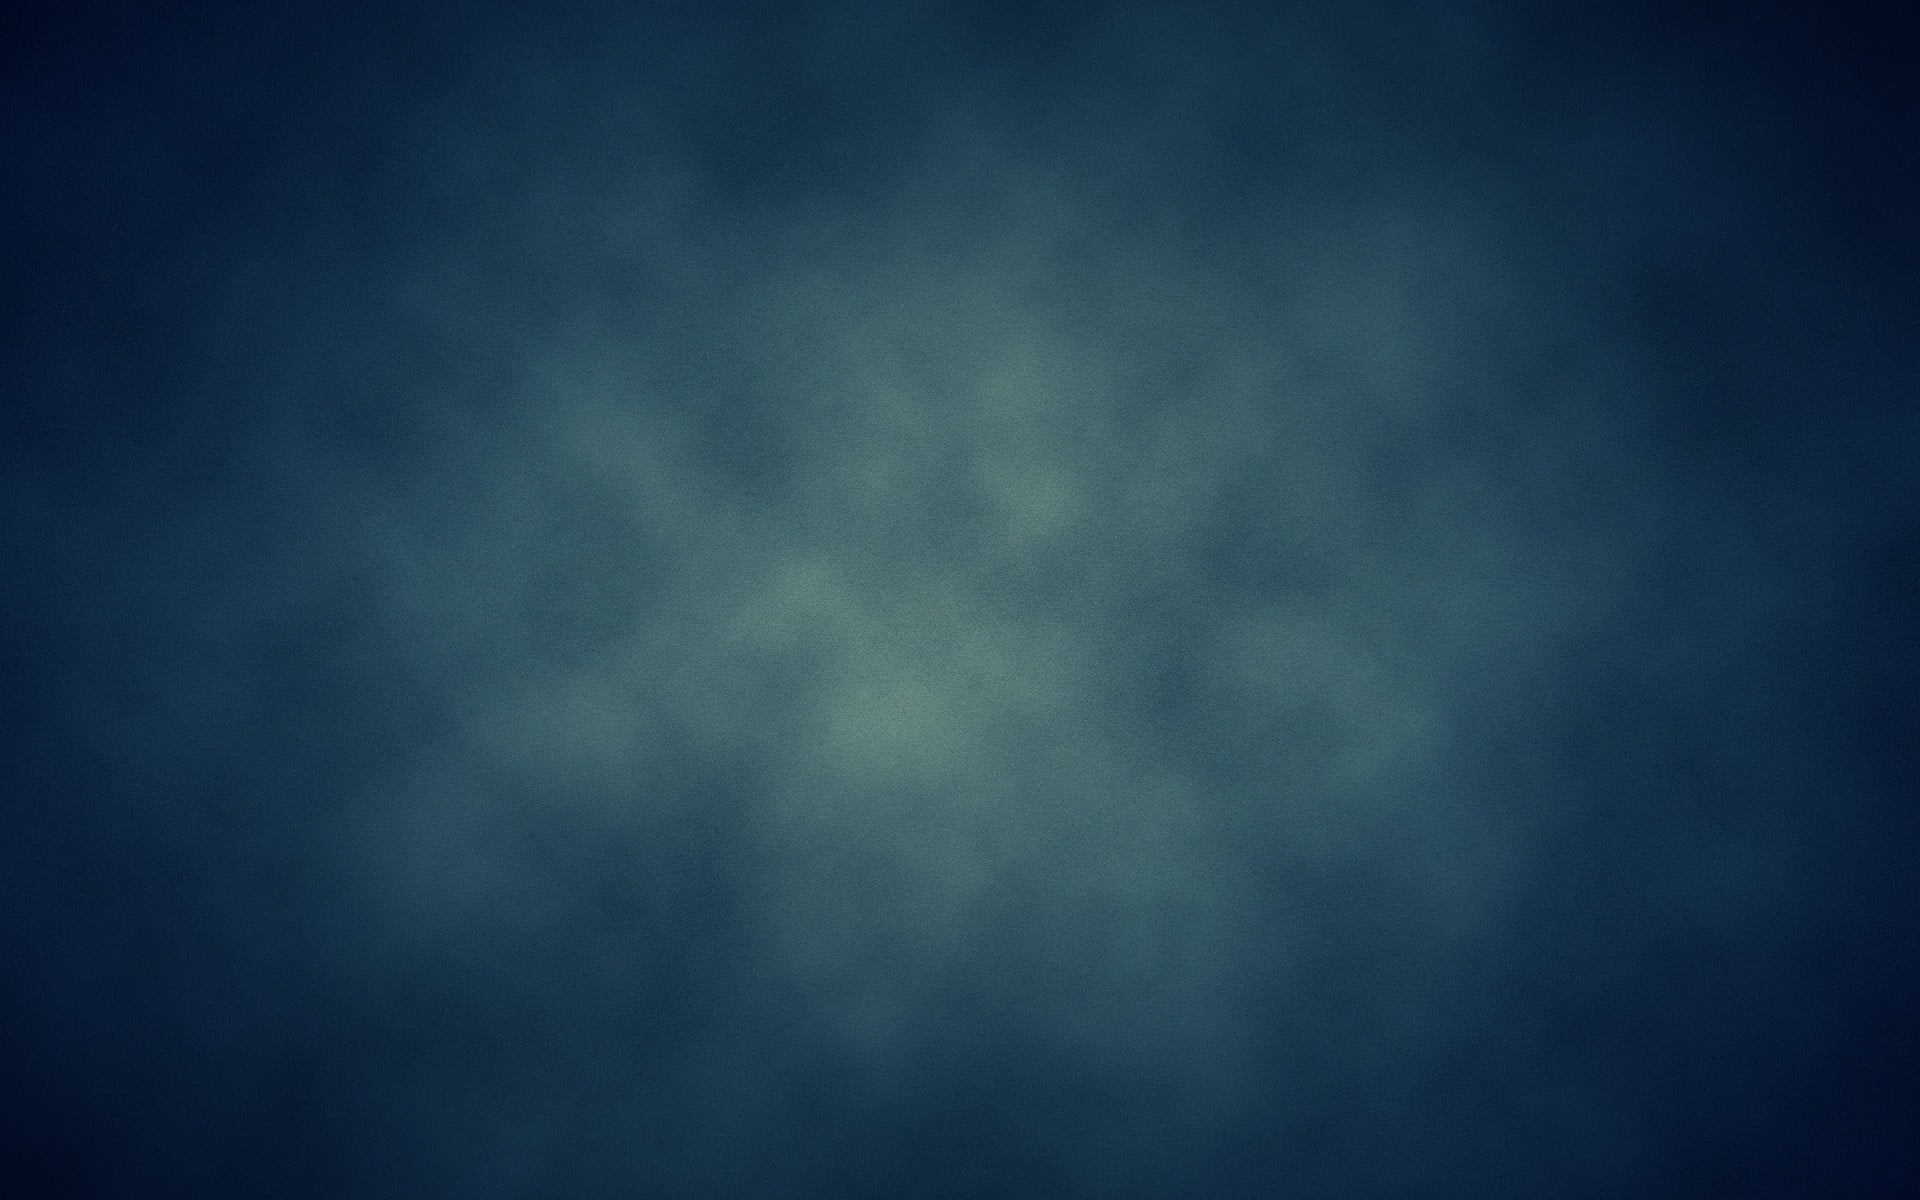 Abstract wallpaper, blue, simple background, digital art, cloud - sky